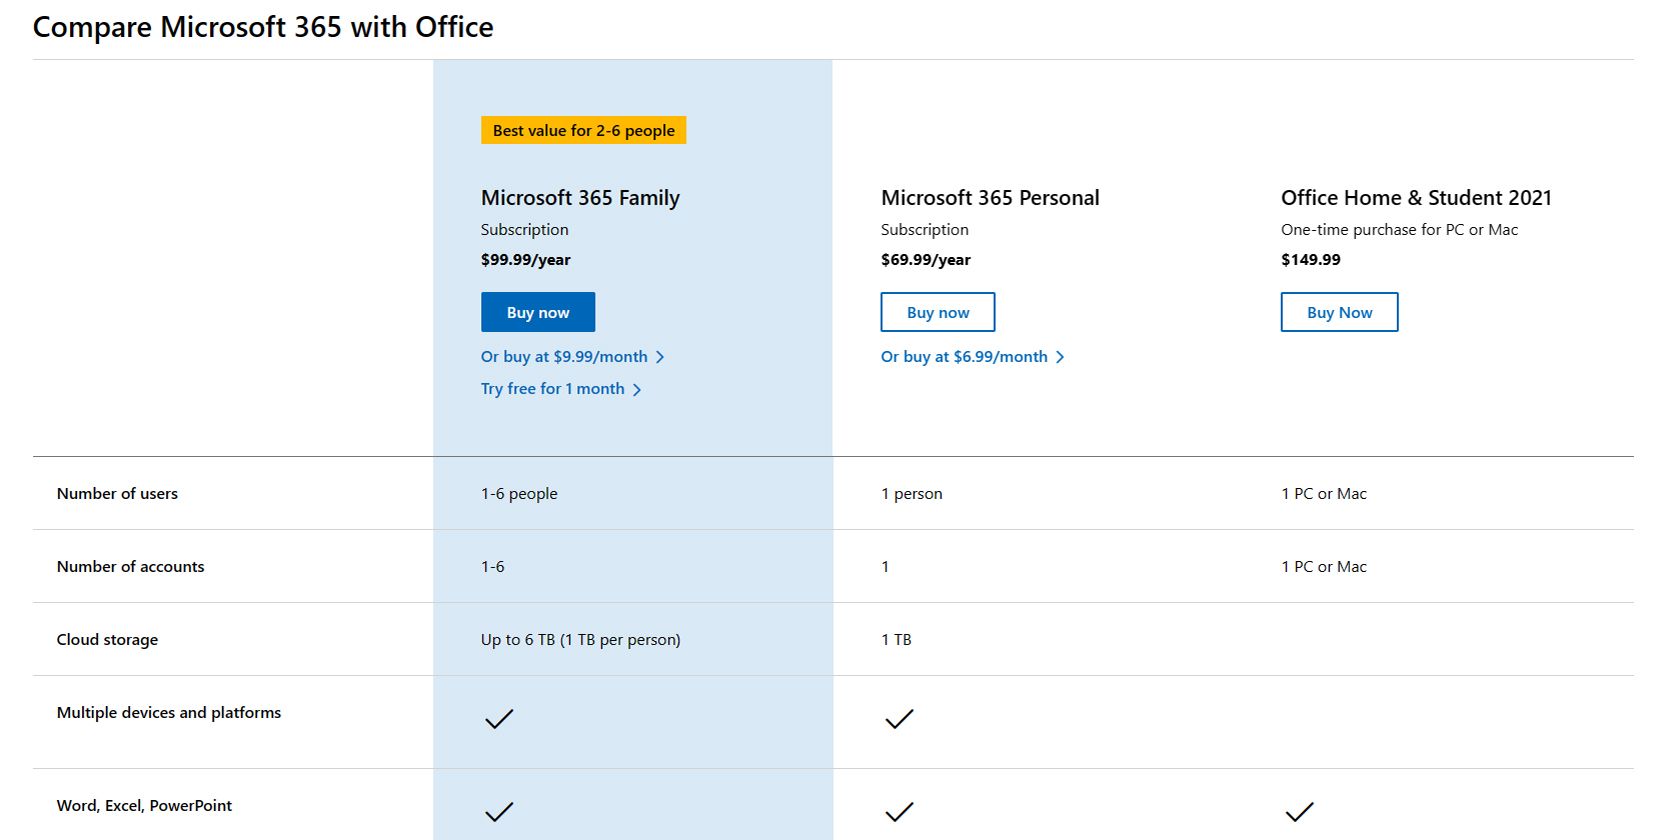 Microsoft 365 vs Office Home & Student 2021